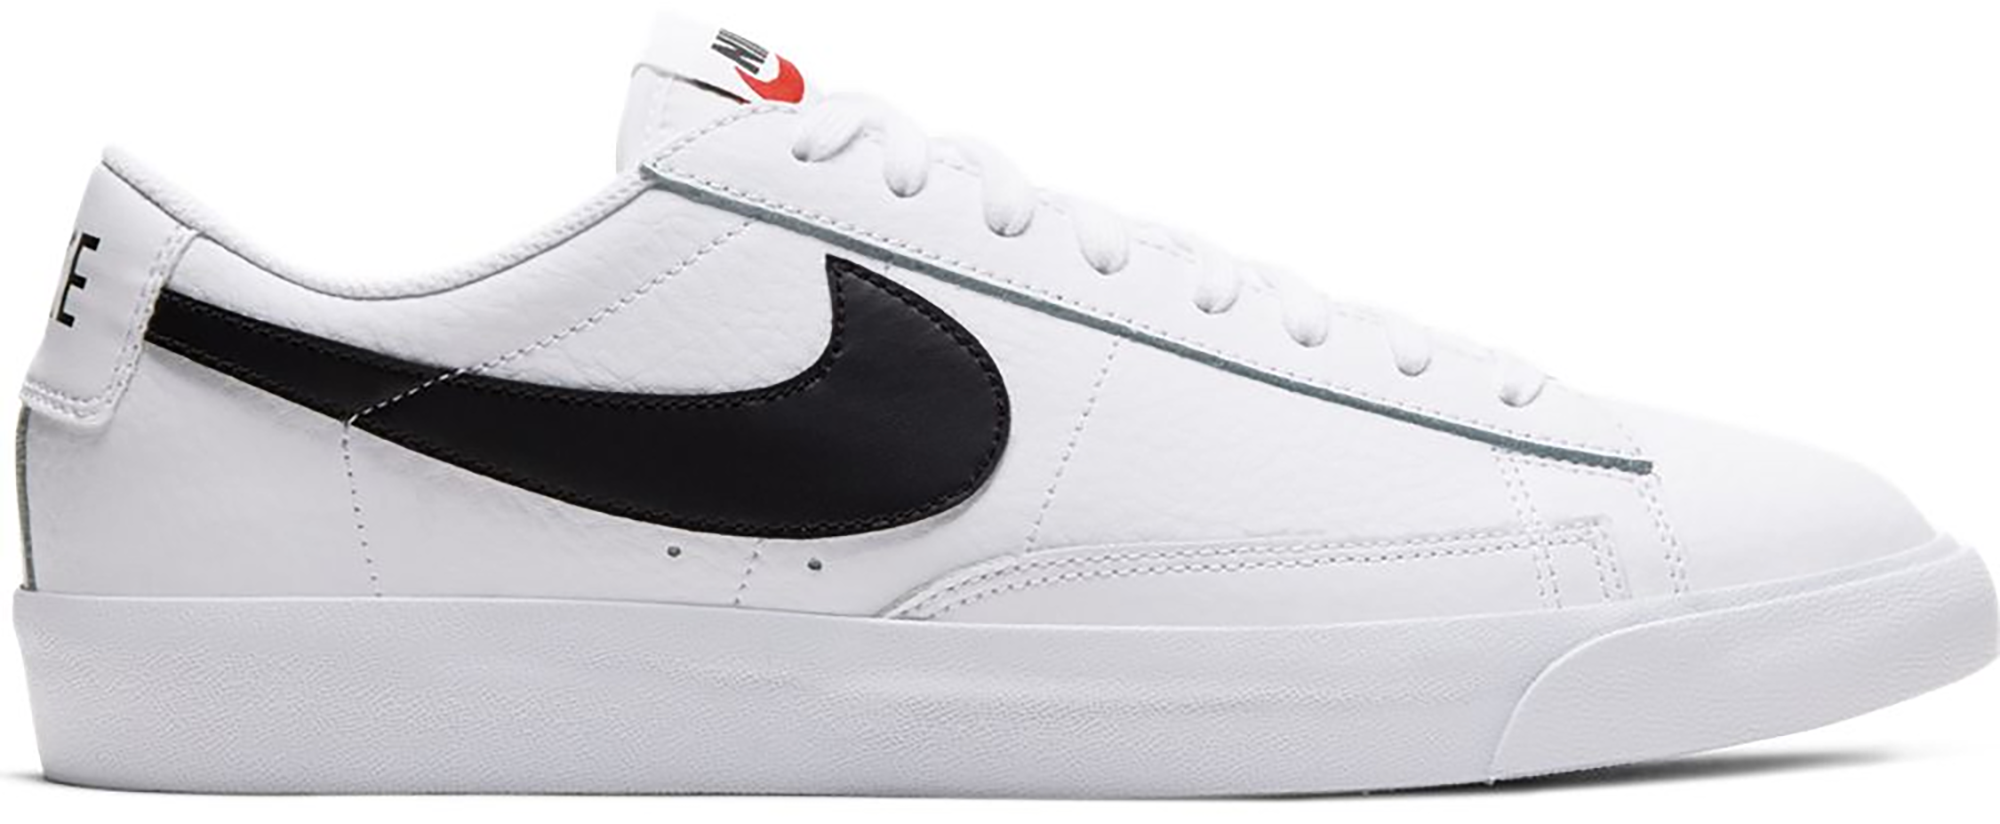 Nike Blazer Low White Black (2020 